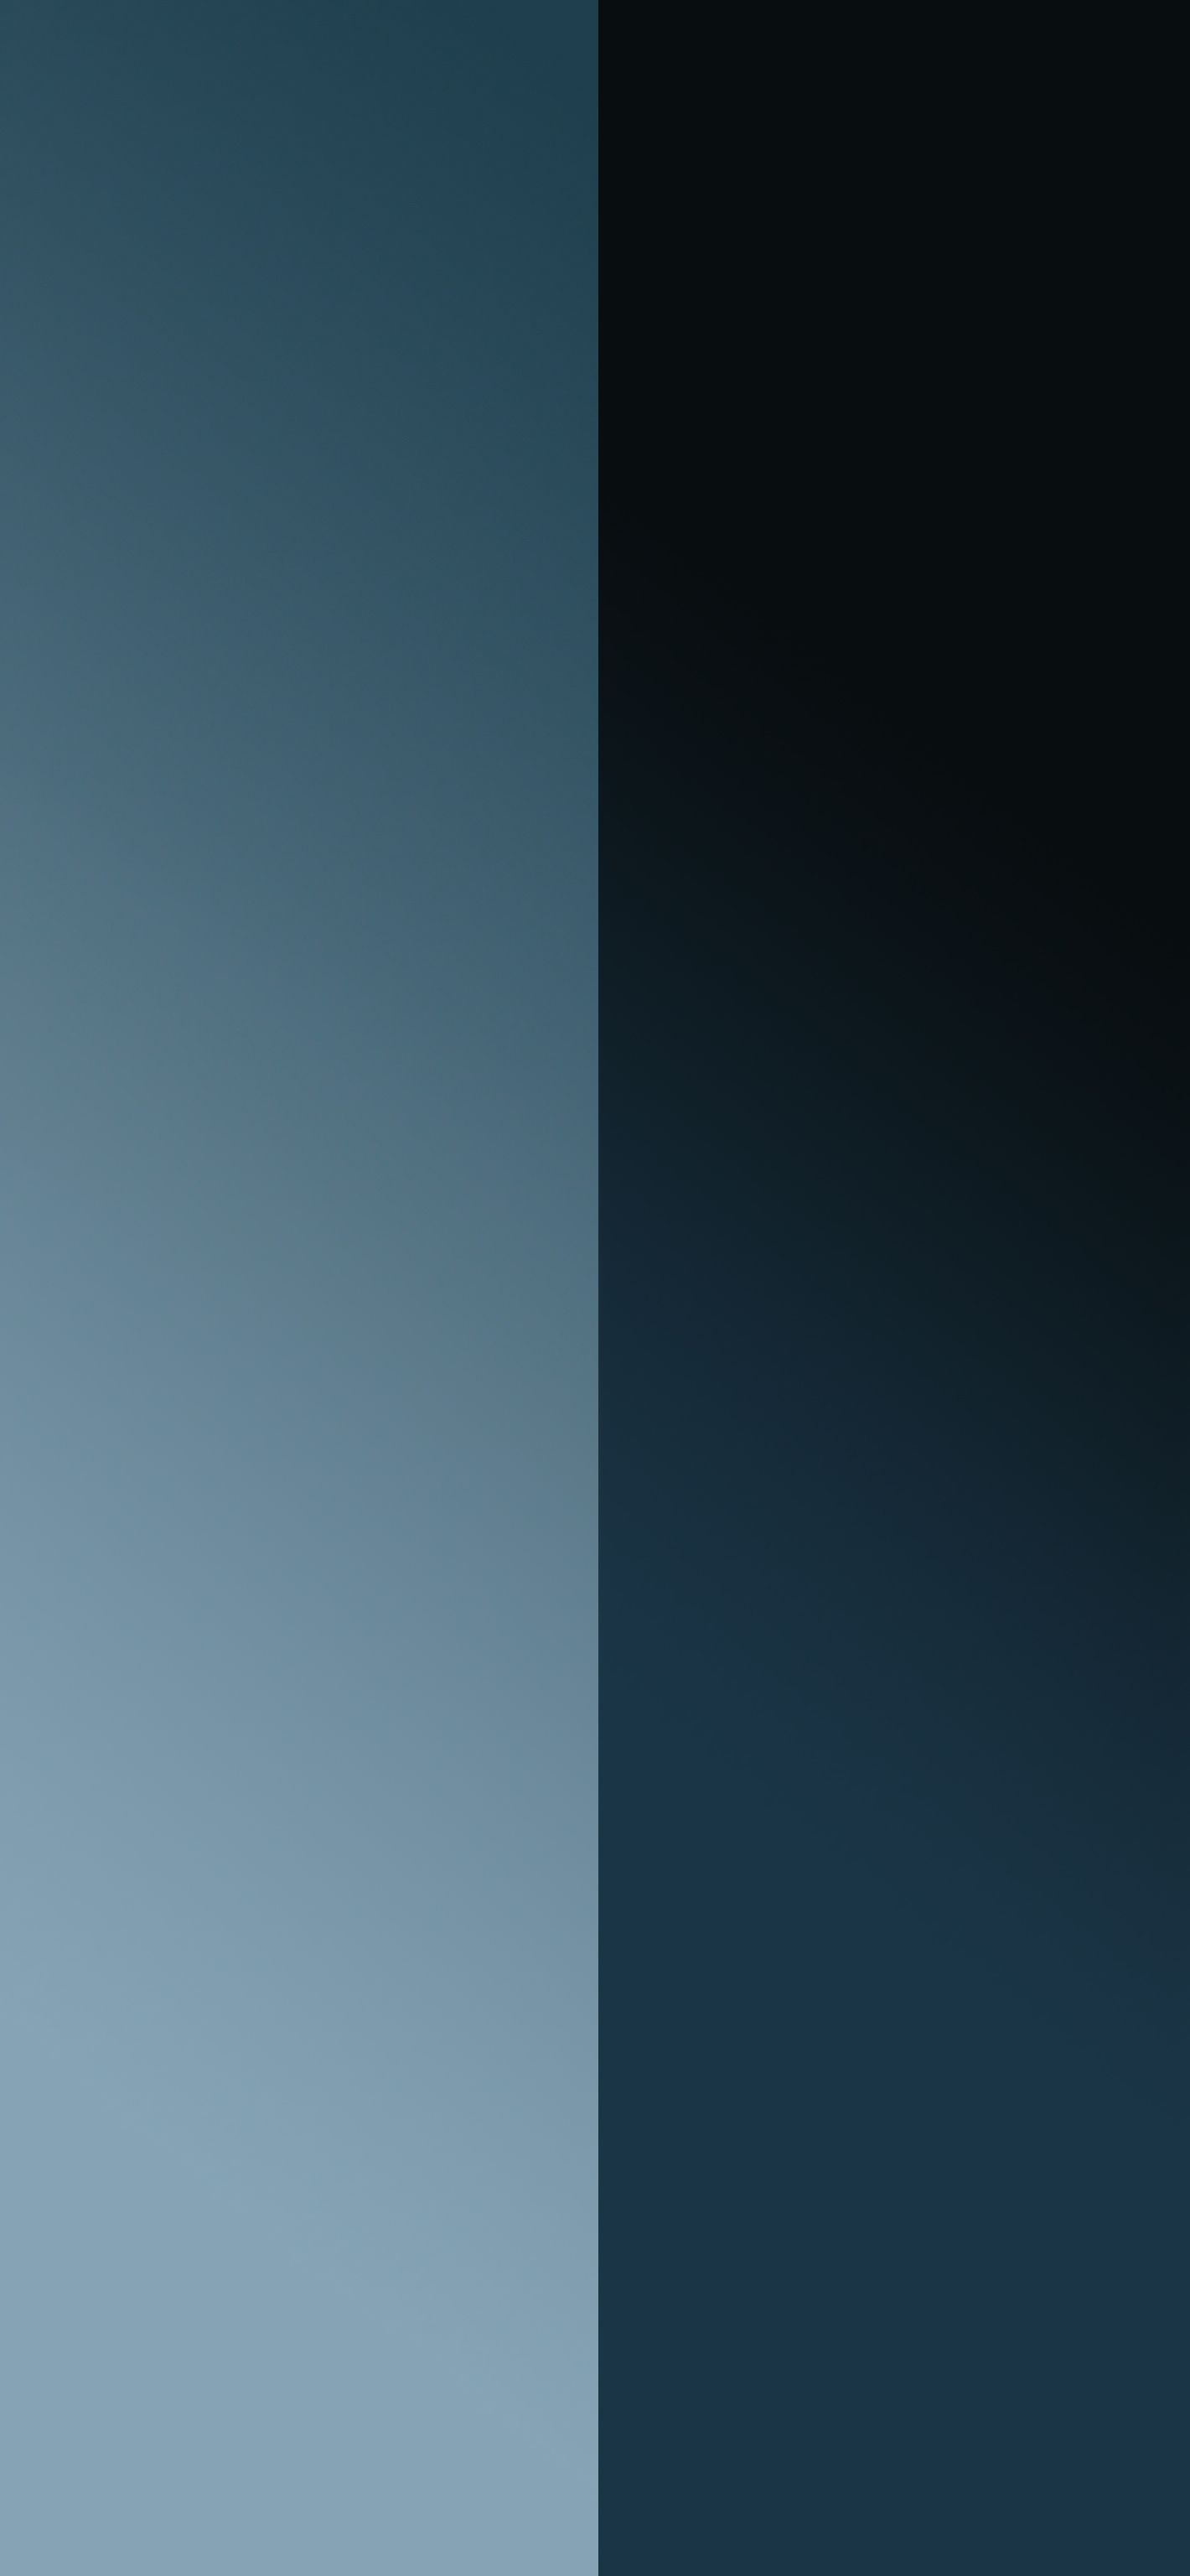 Pacific Blue. DUAL Central. Color wallpaper iphone, iPhone homescreen wallpaper, Dual screen wallpaper